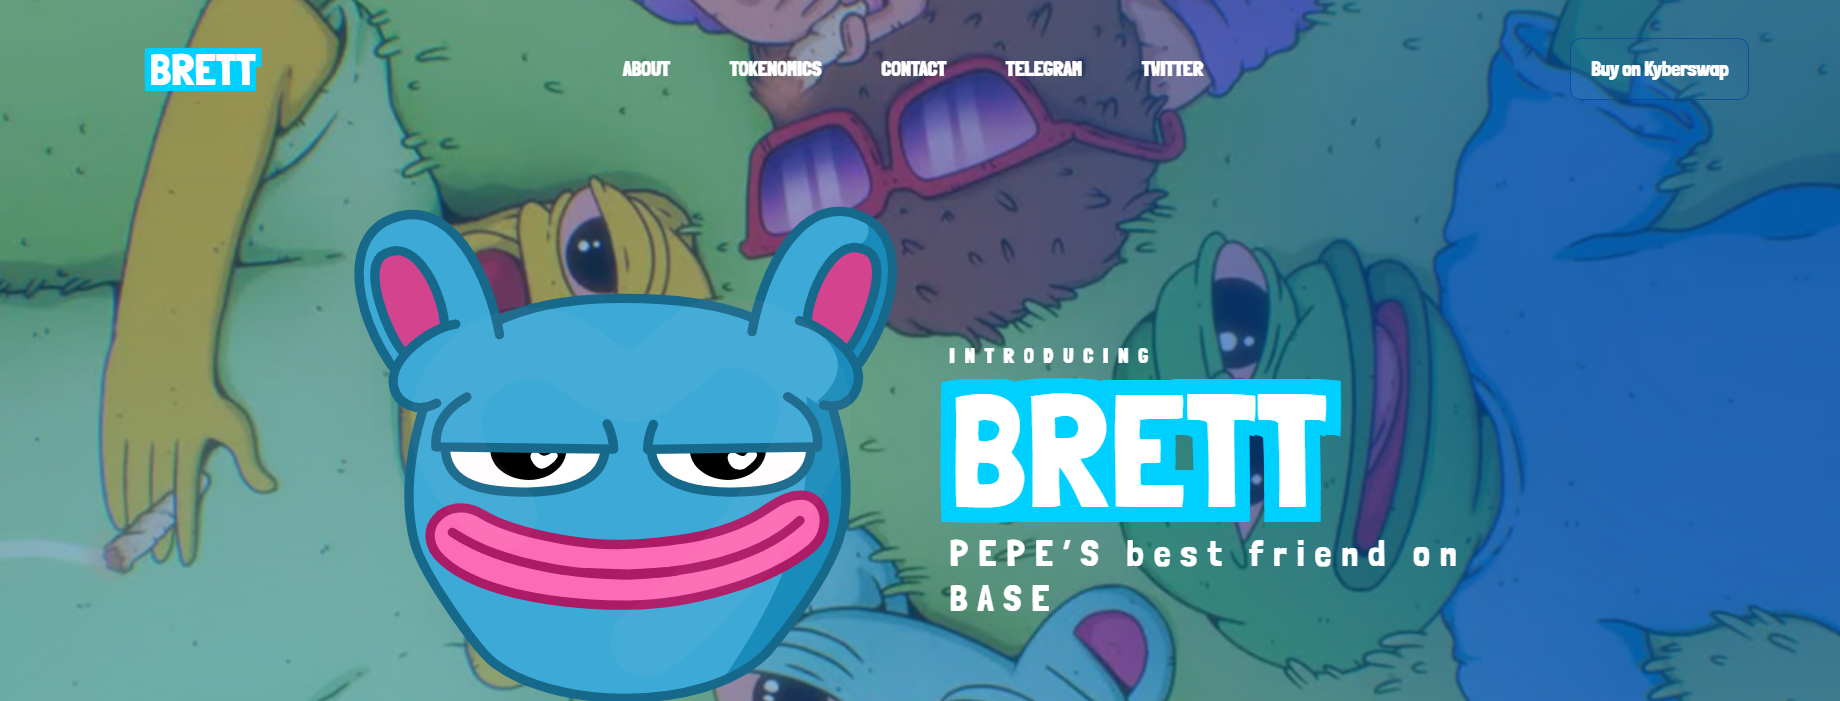 brett-homepage